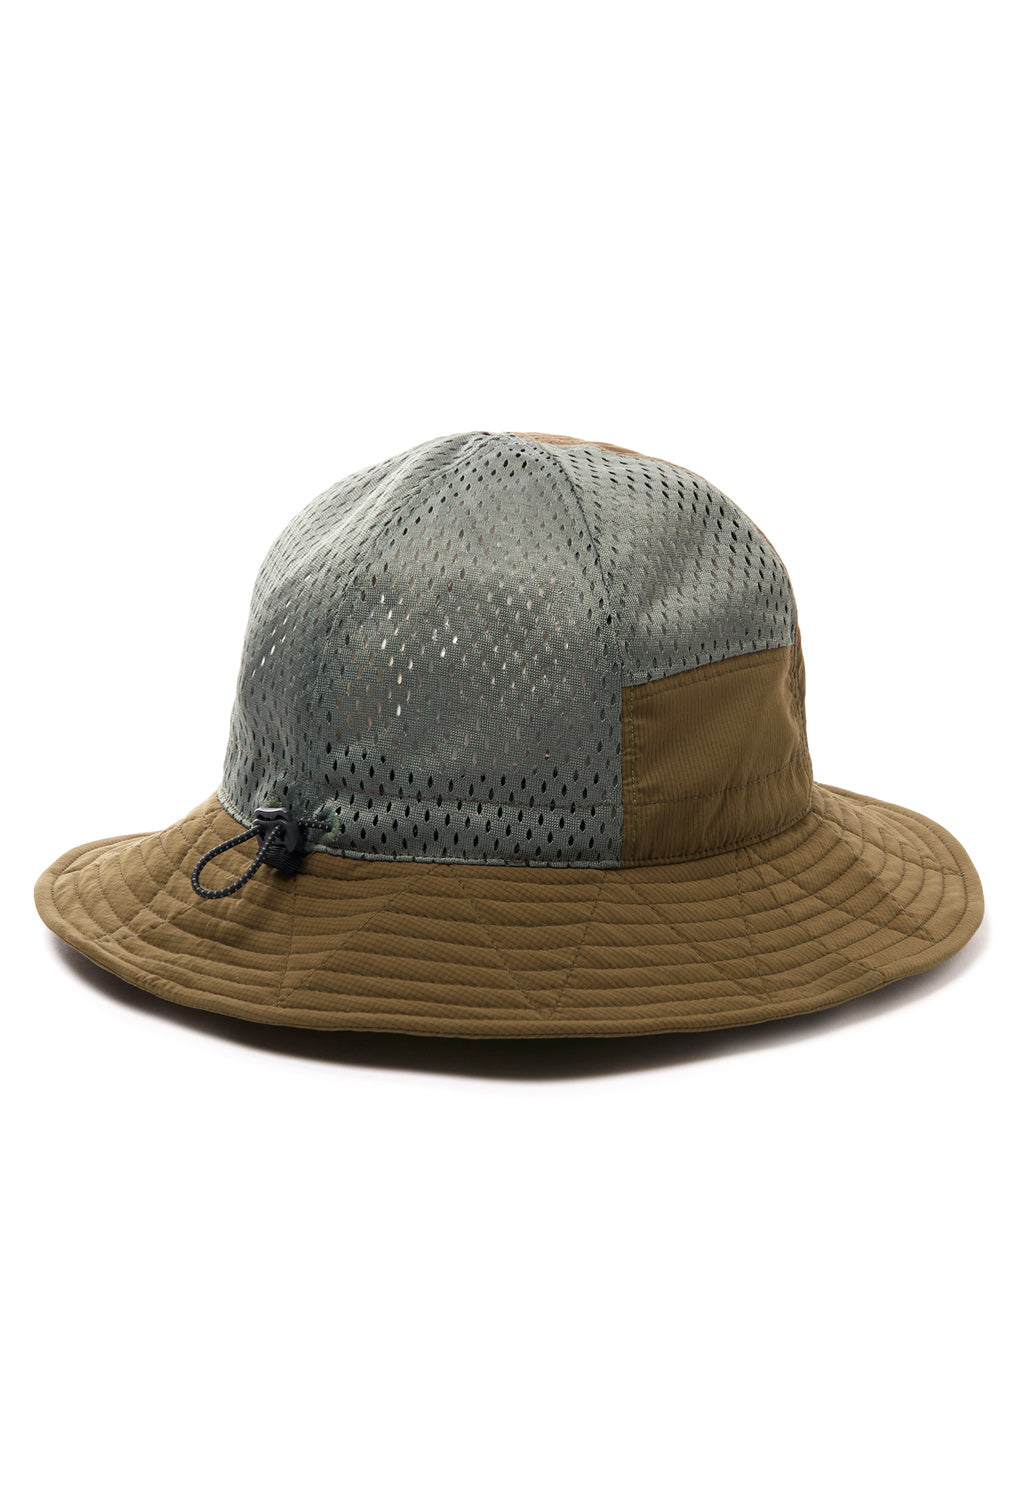 CAYL Stretch Nylon Mesh Hat - Brown Khaki